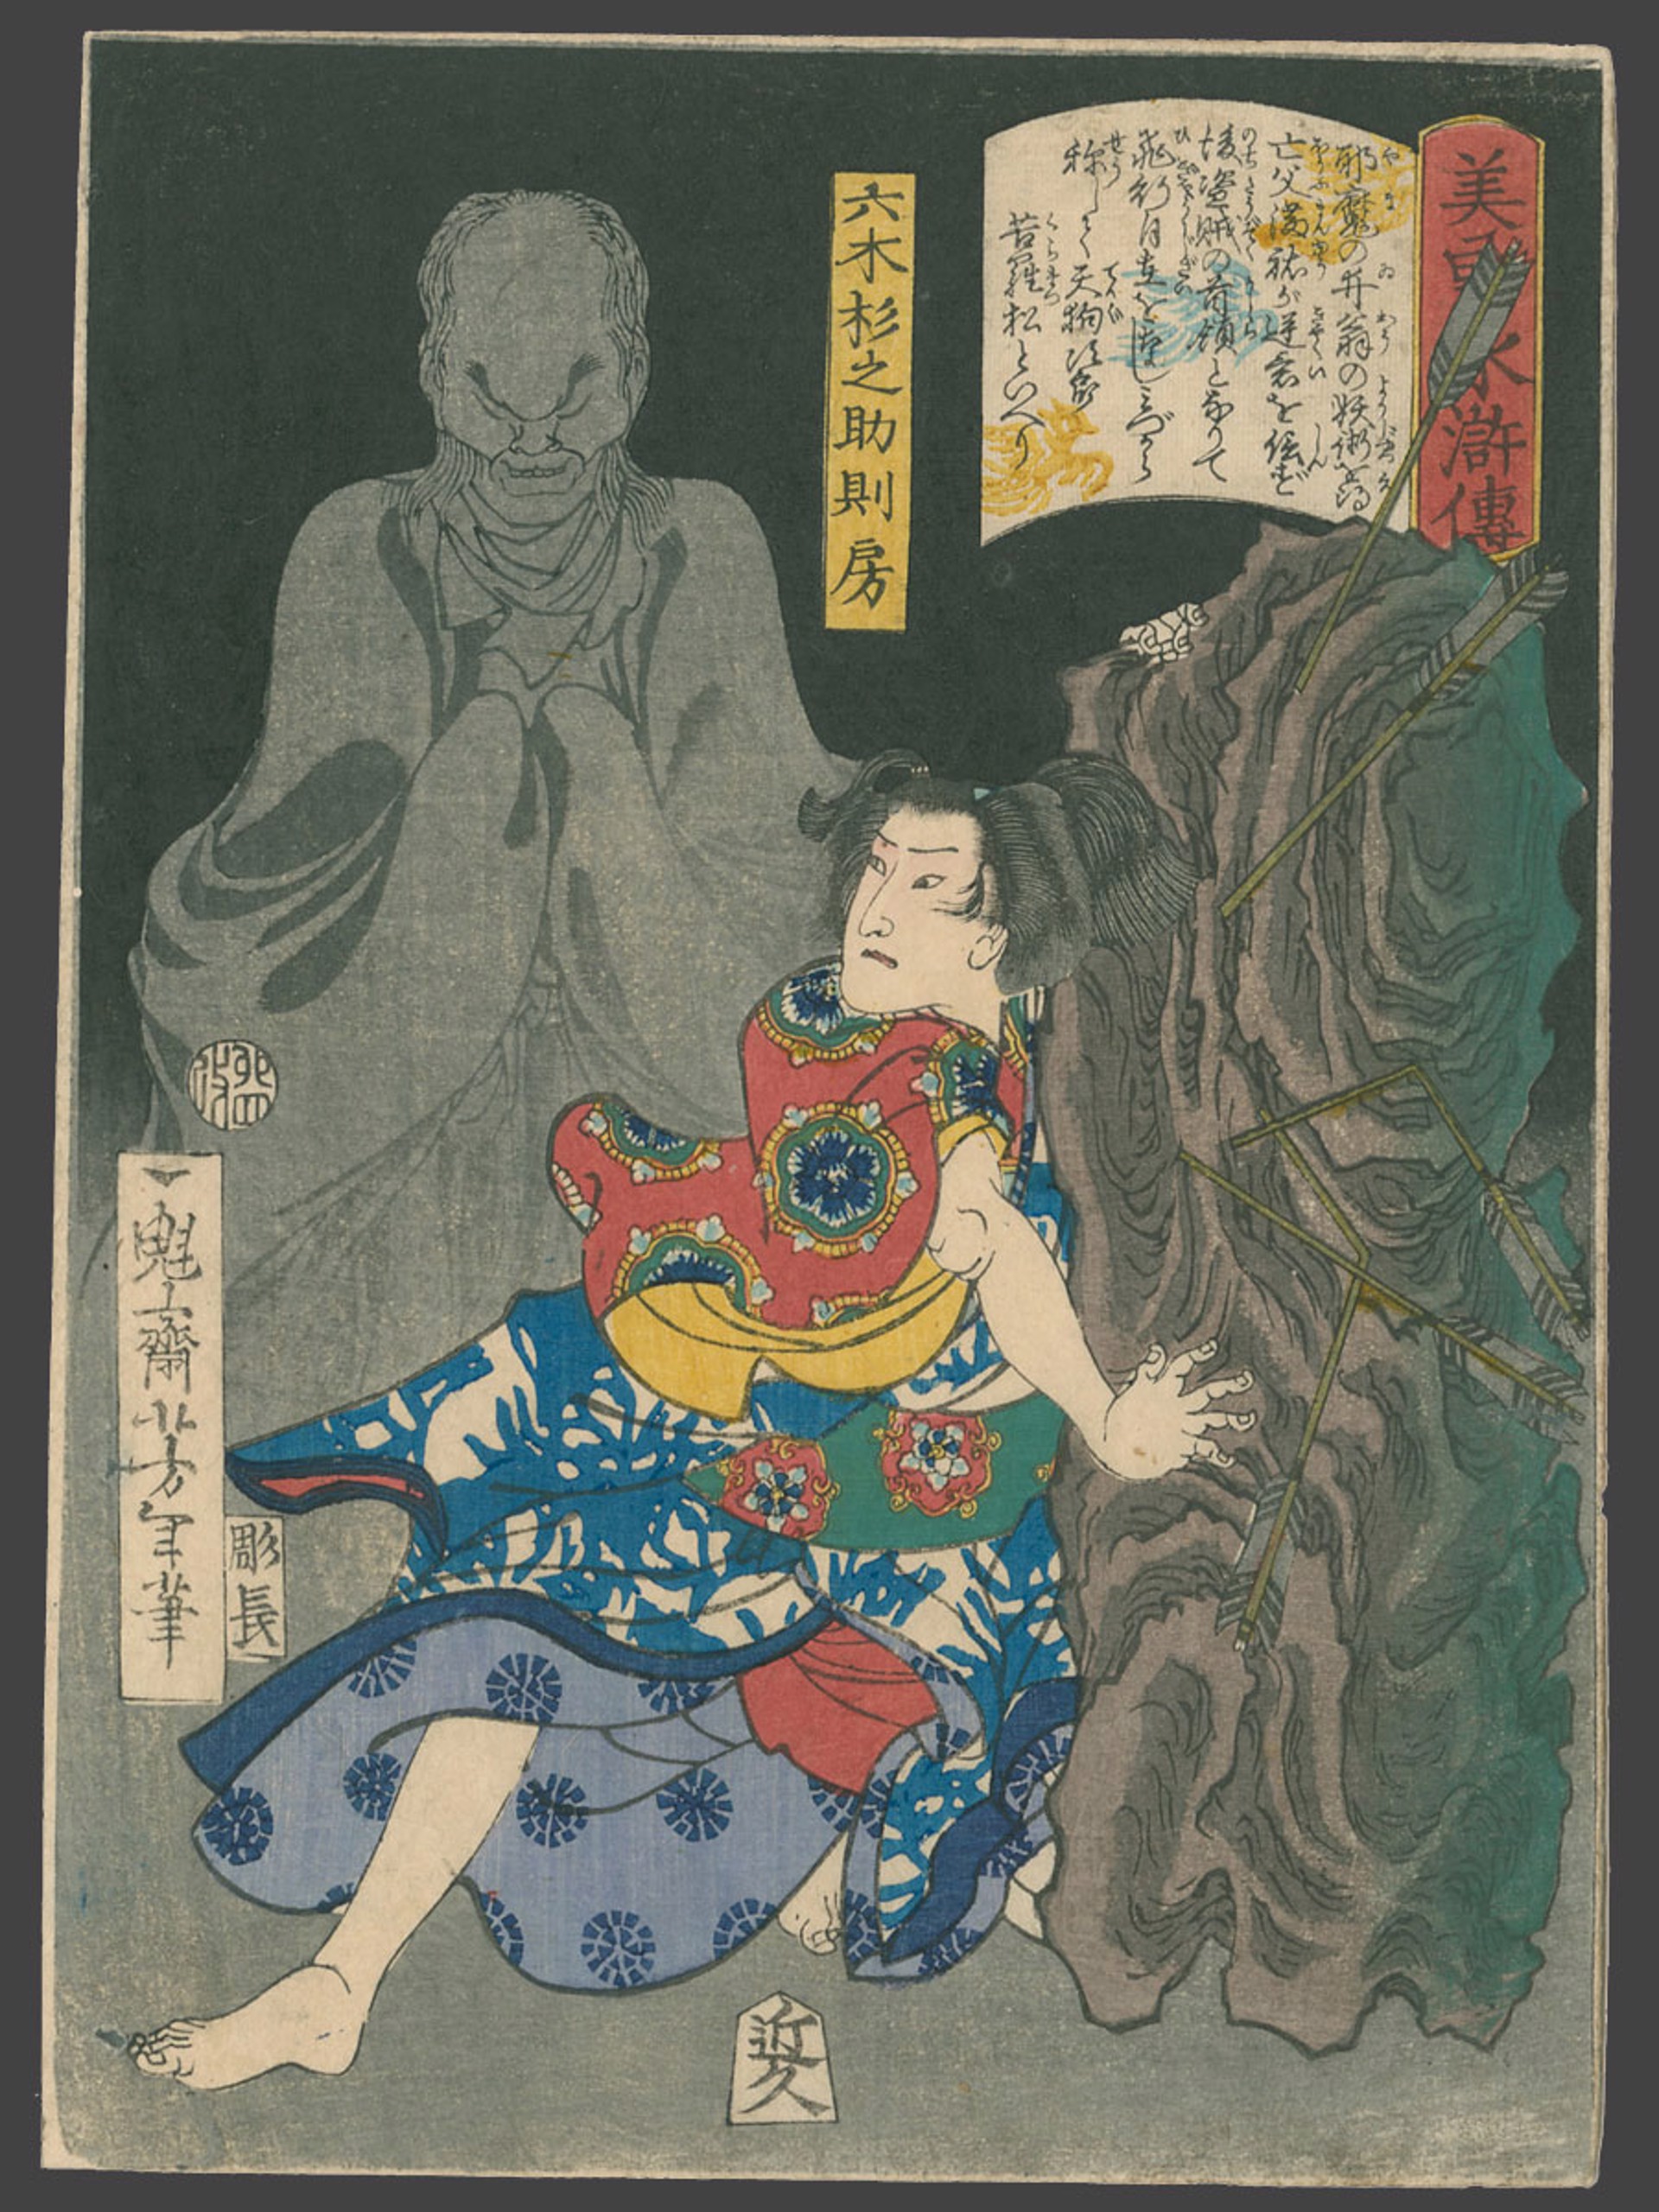 Rokugi Suginosuke Norifusa Biyu Suikoden (Beauty and Valor in Tales of the Water Margin) by Yoshitoshi